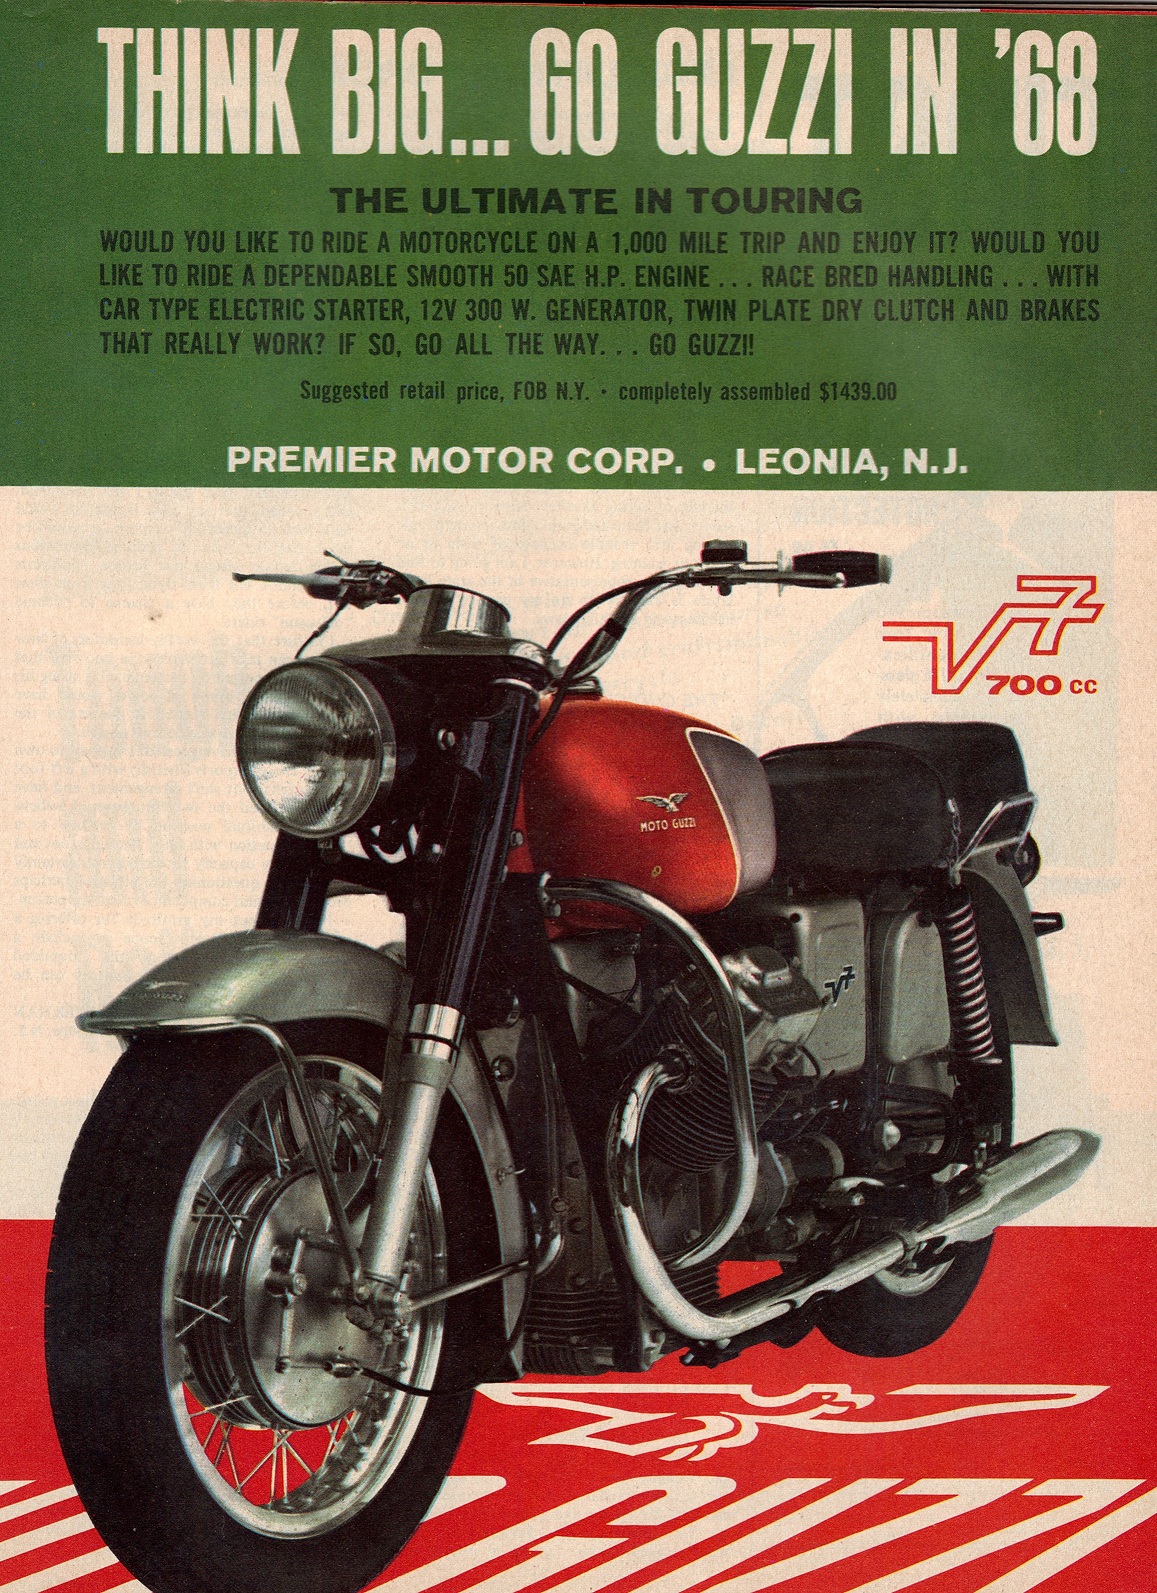 Moto Guzzi advertisement: Think Big...Go Guzzi in 68.